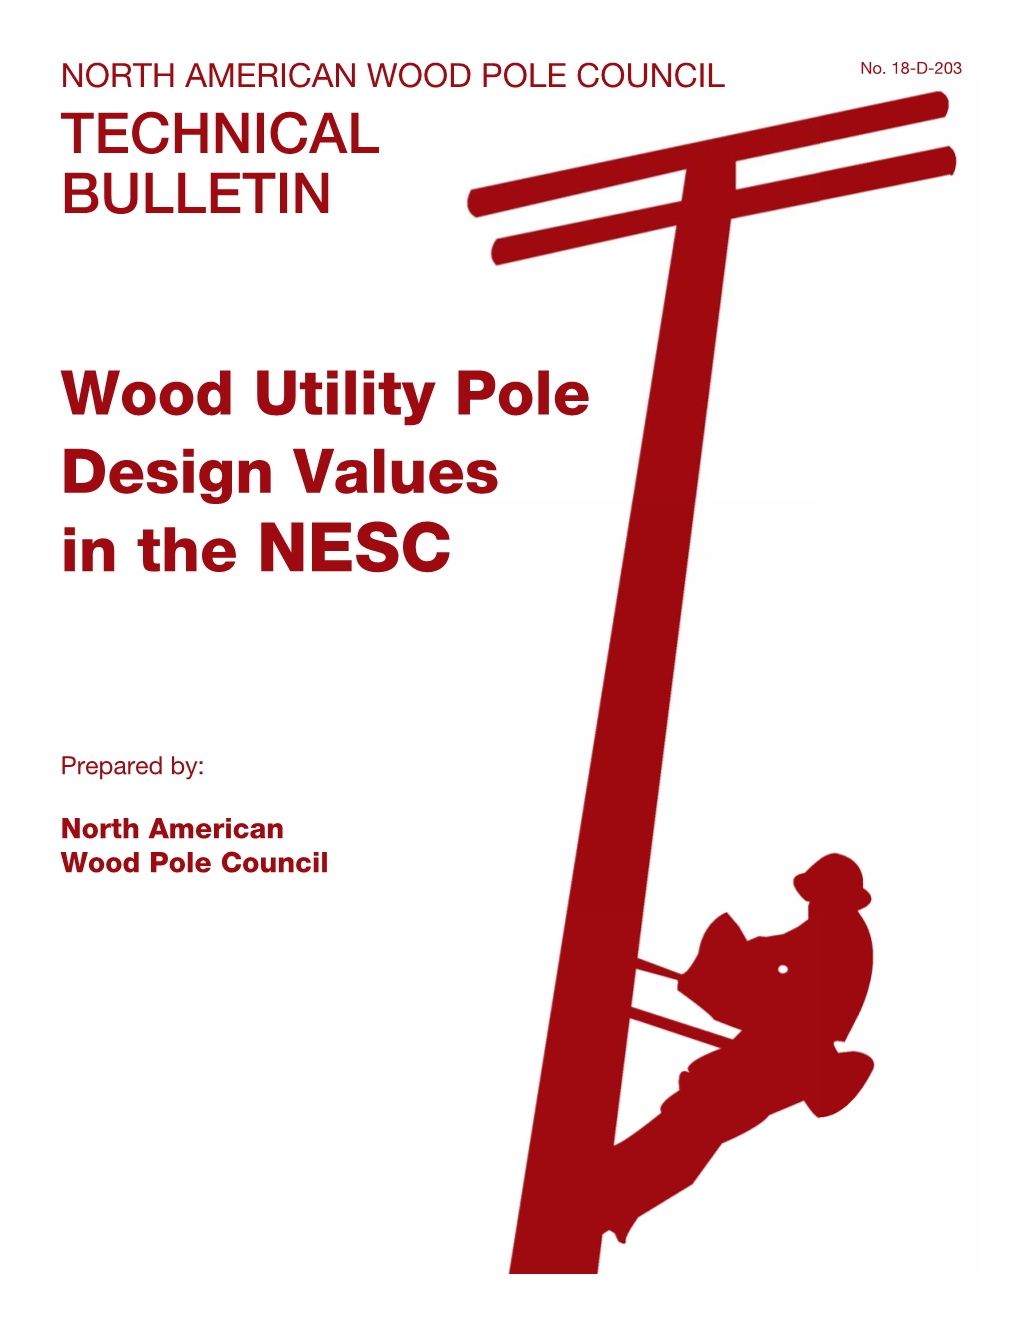 Wood Utility Pole Design Values in the NESC